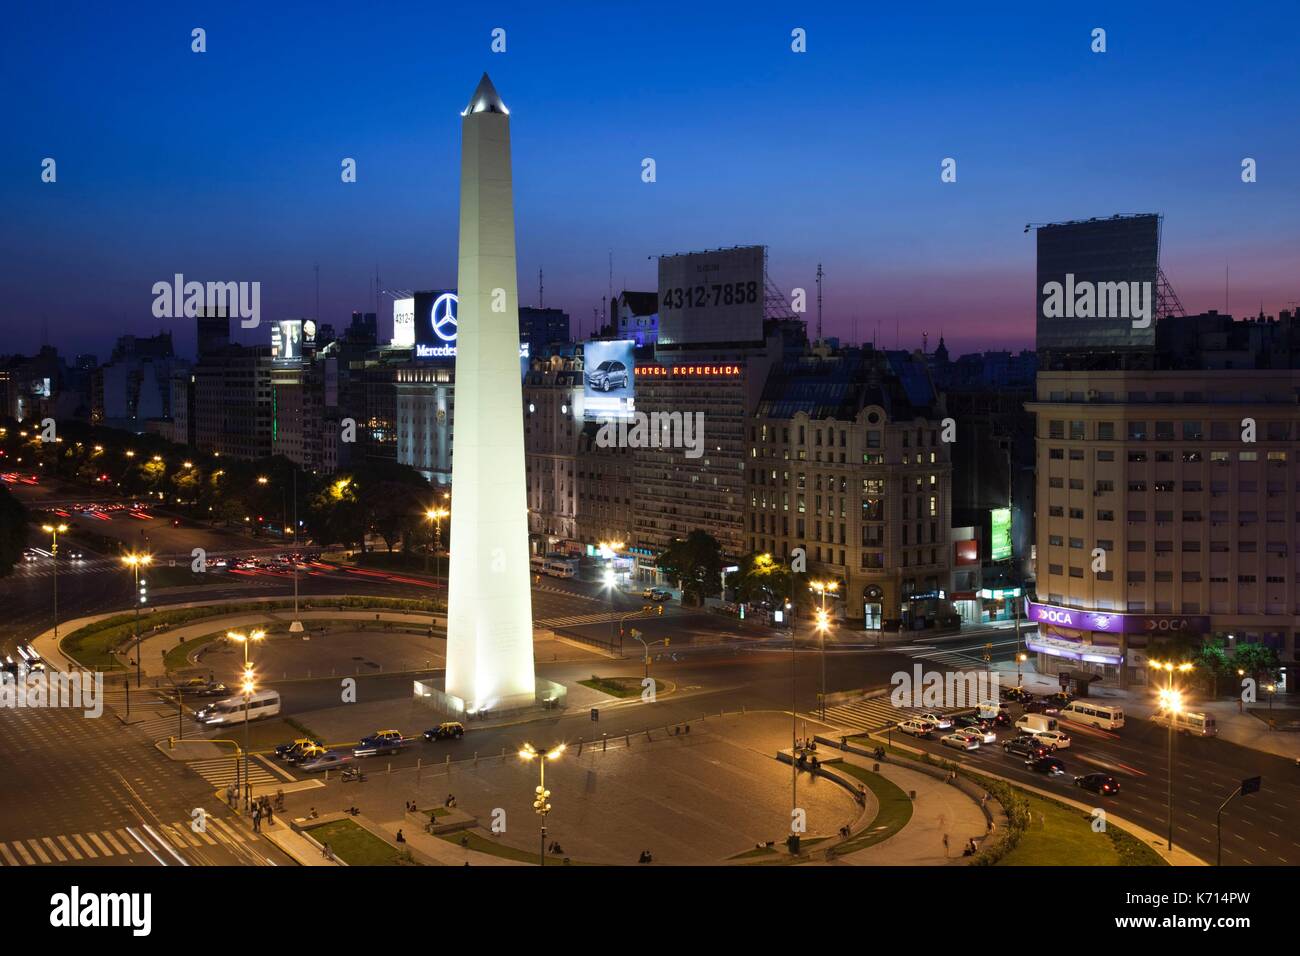 Argentina, Buenos Aires, El Obelisko, Plaza de la Republica, and Avenida 9 de Julio, symbol of Argentina, evening Stock Photo